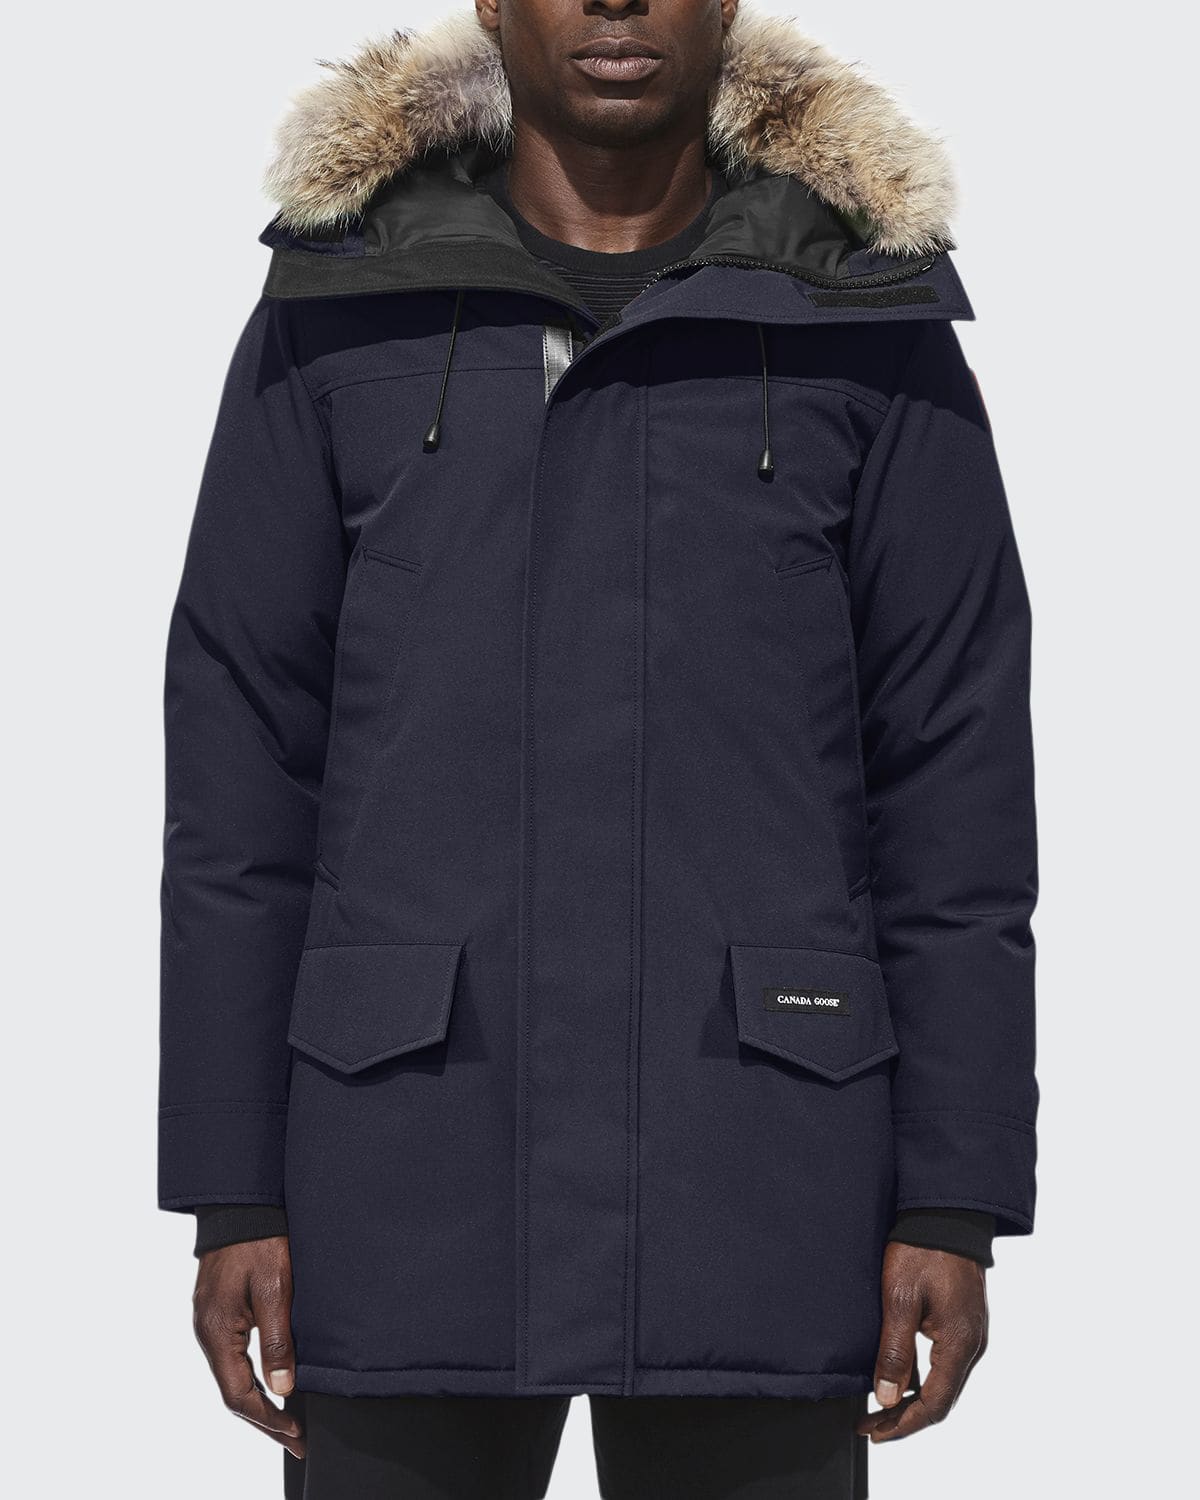 Langford Arctic-Tech Parka Jacket with Fur Hood, Graphite